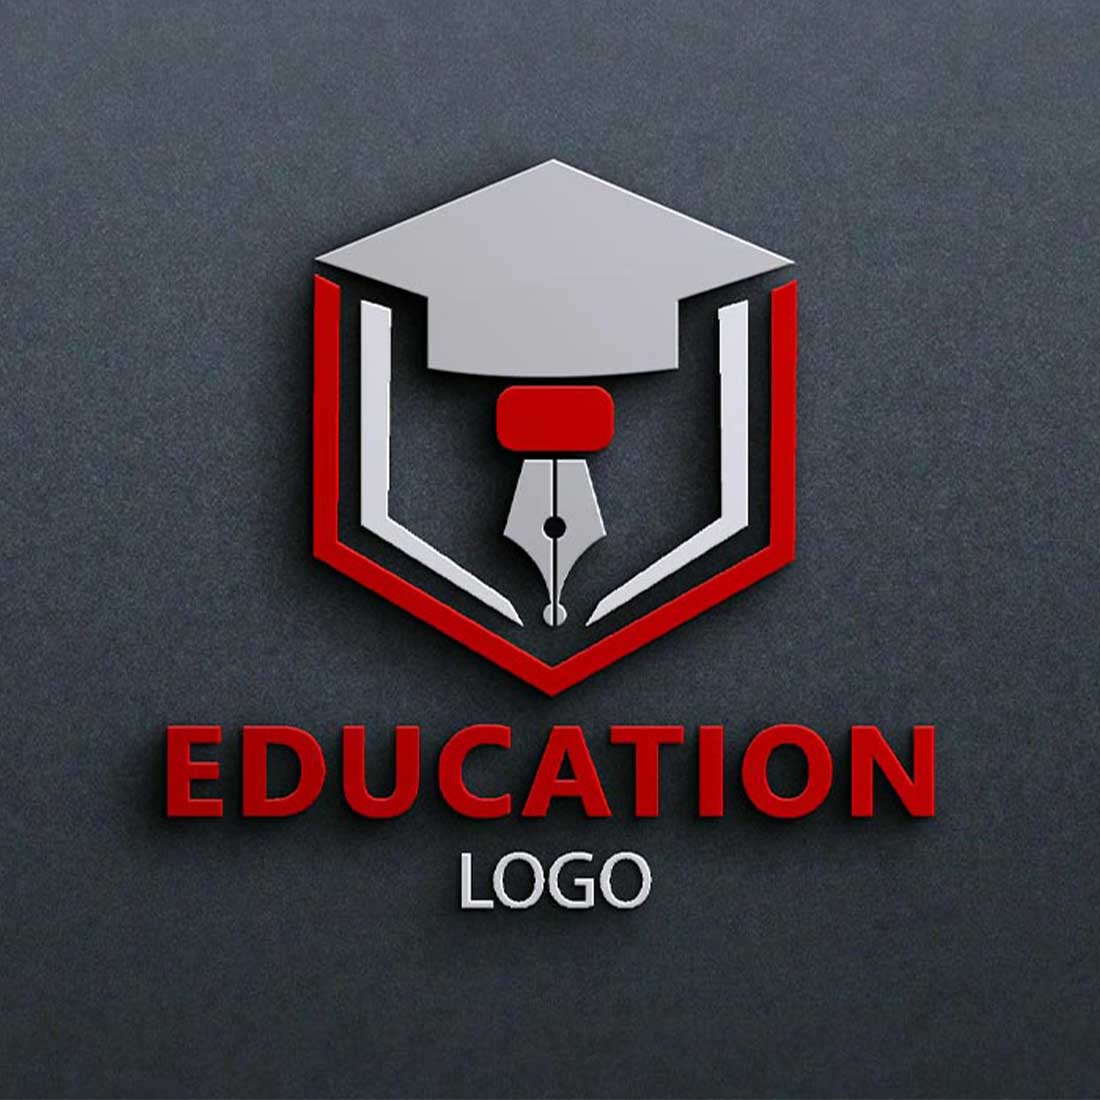 Education Logo Design | School Logo | Illustrator Editable Designs cover image.